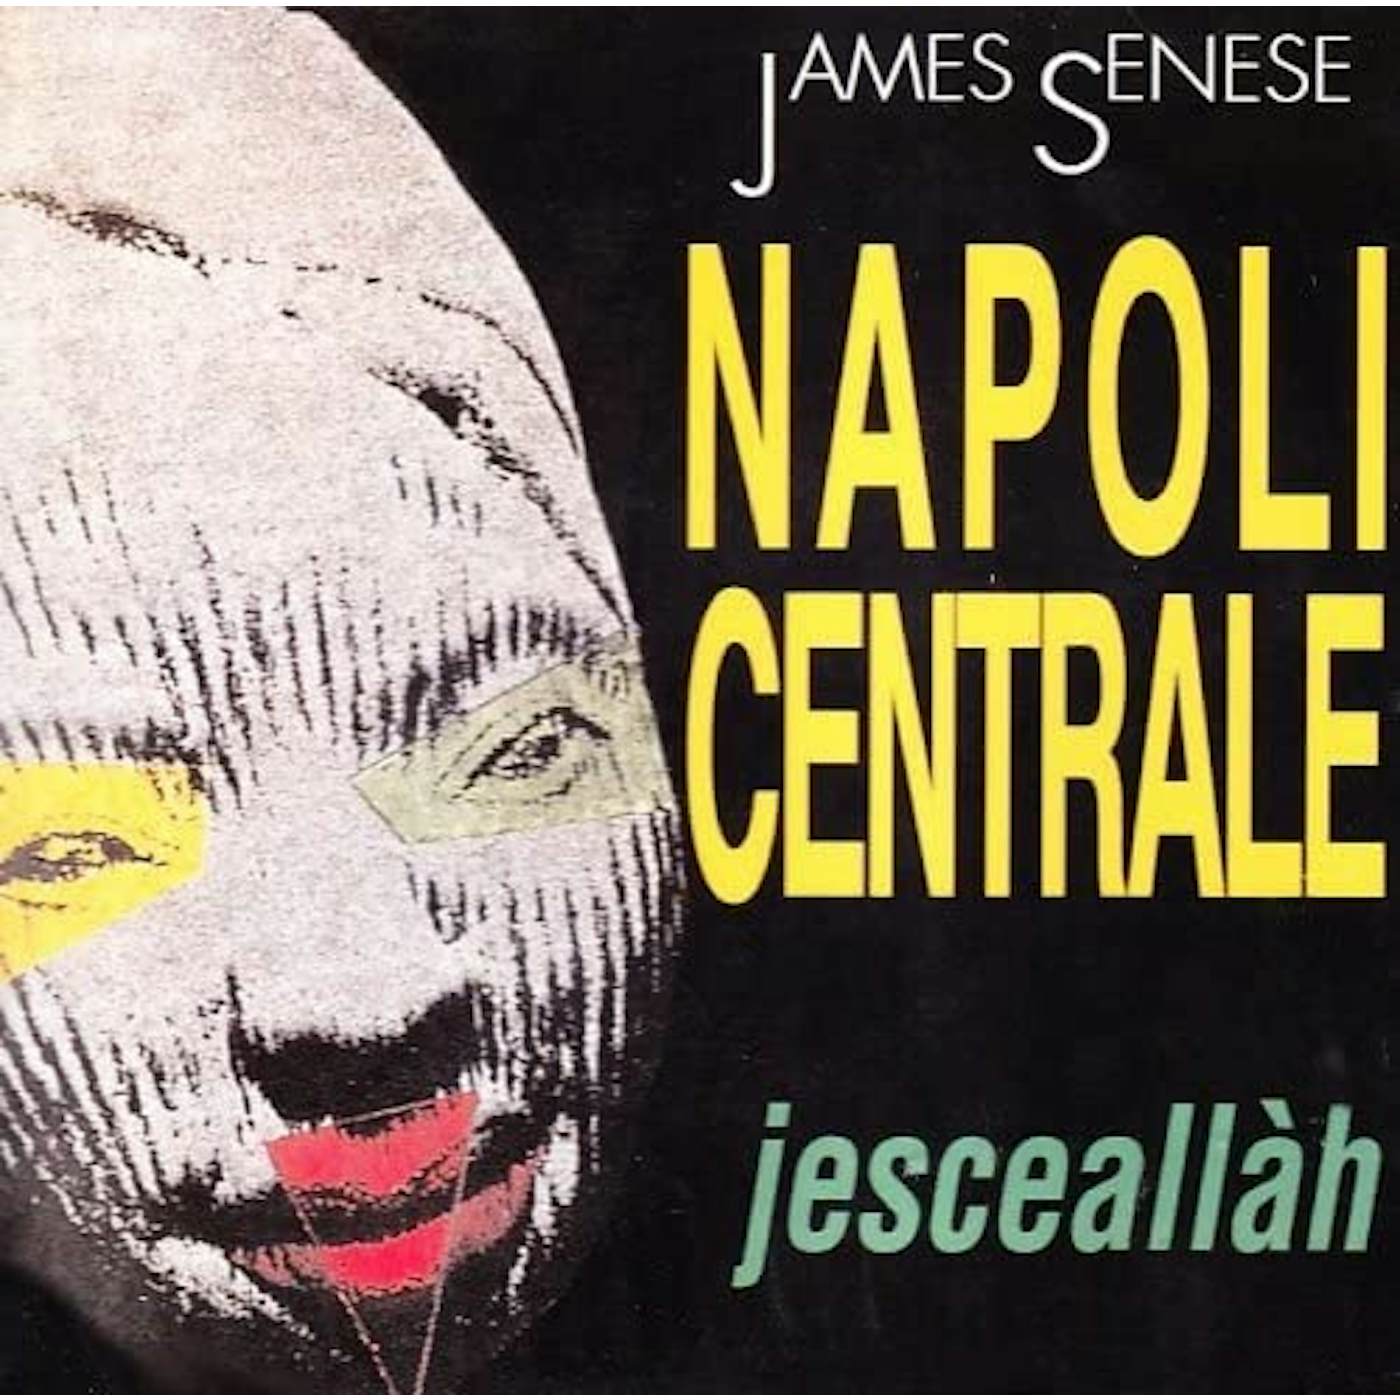 Napoli Centrale JESCEALLAH Vinyl Record